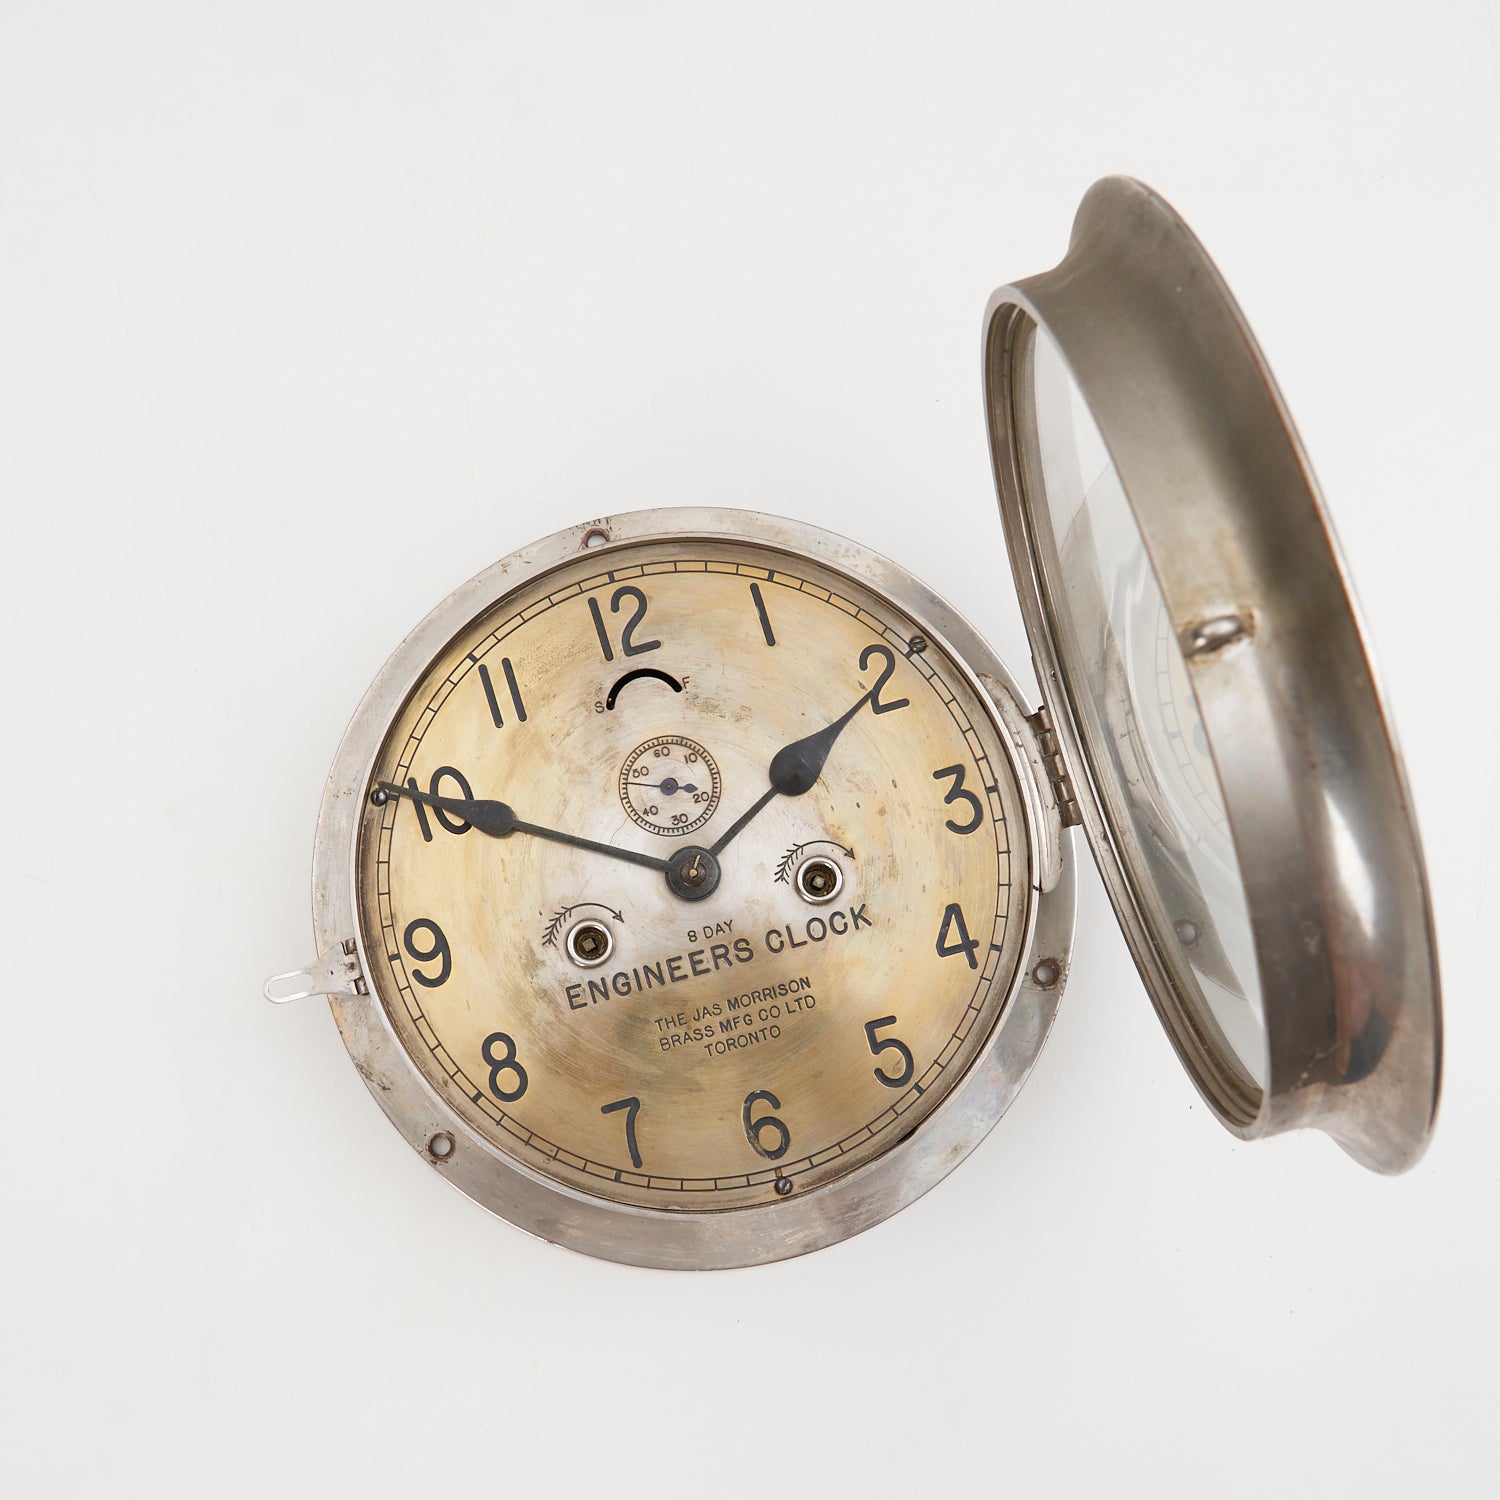 Vintage Engineers Clock by The Jas Morrison Brass Mfg Co Ltd